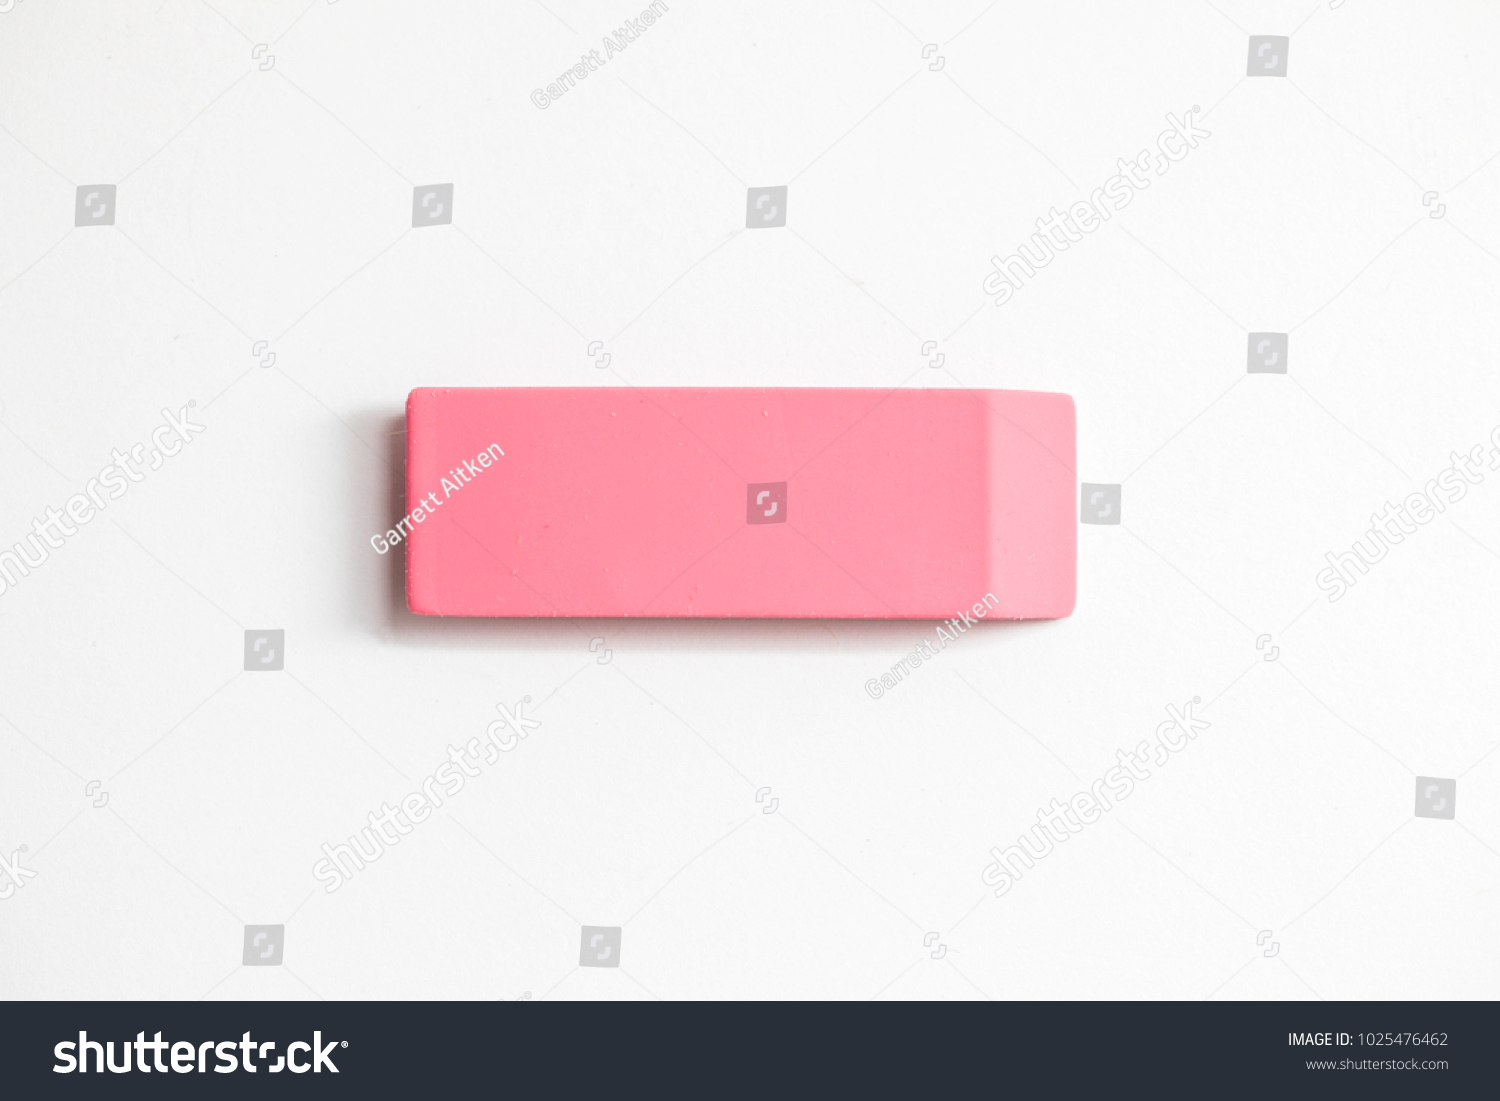 Pink eraser shot up close against a white background #1025476462